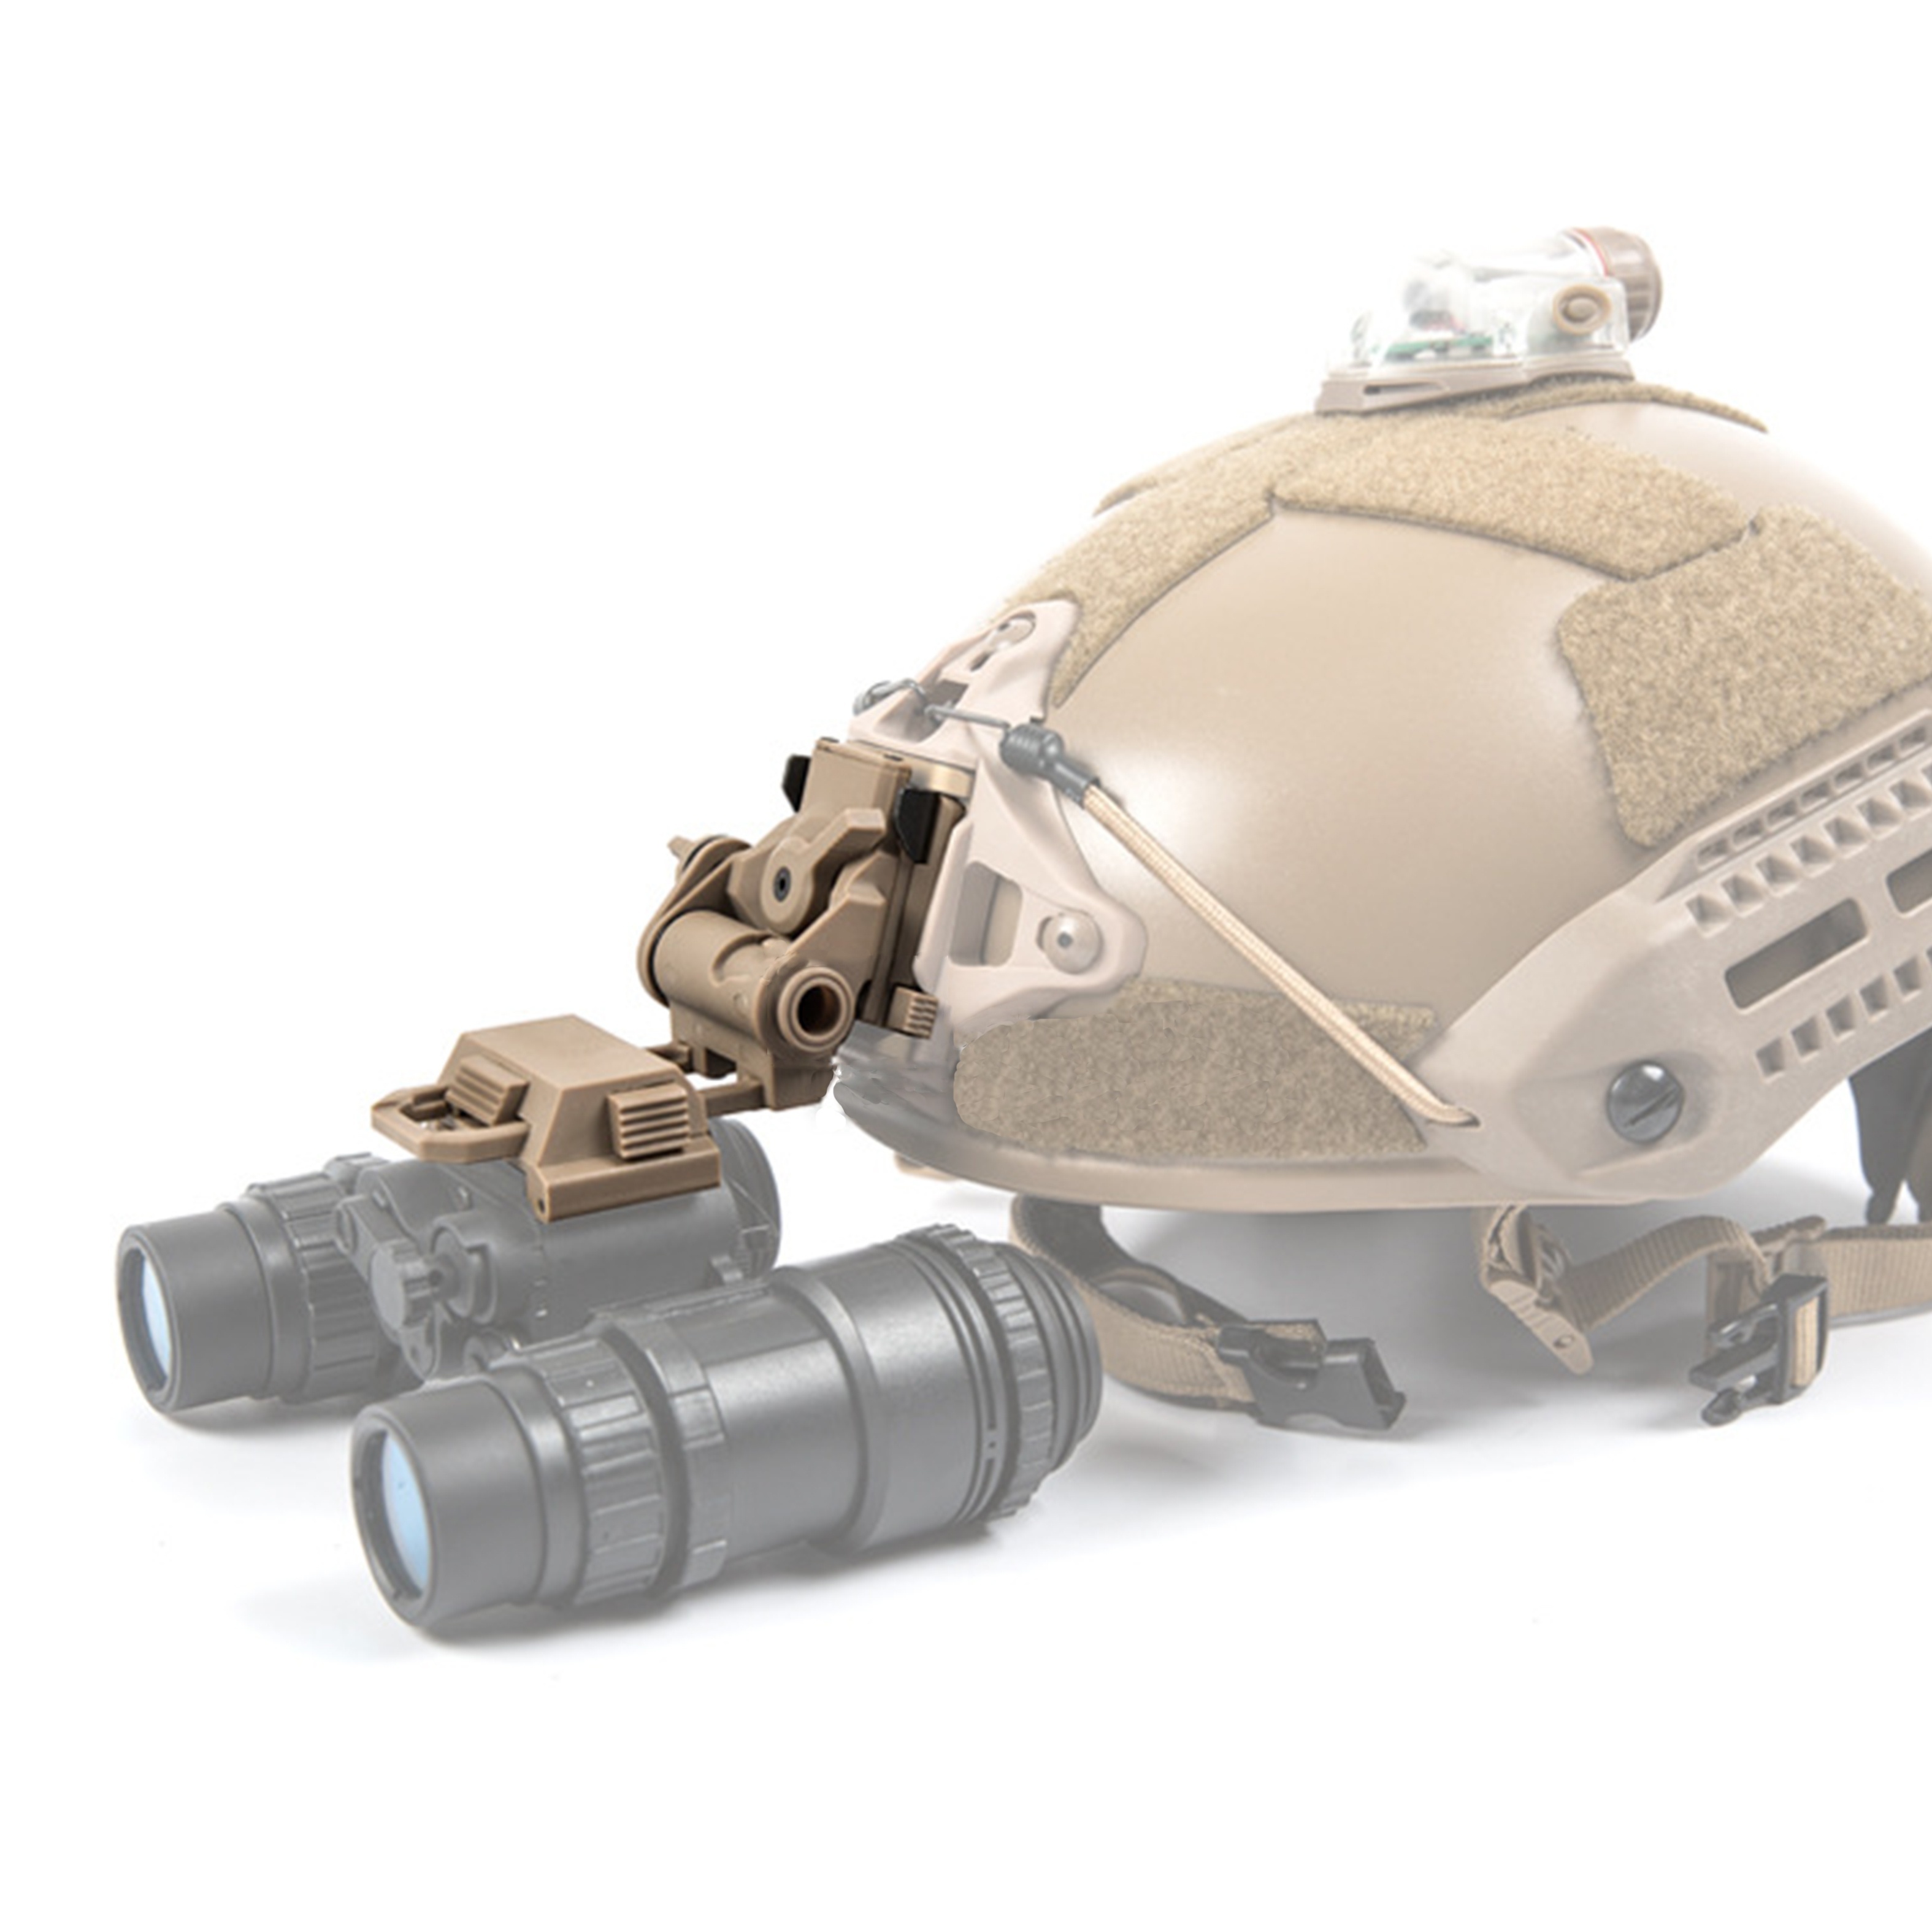 Tactical NVG Helmet Mount Bracket Adapter Head Light Holder for